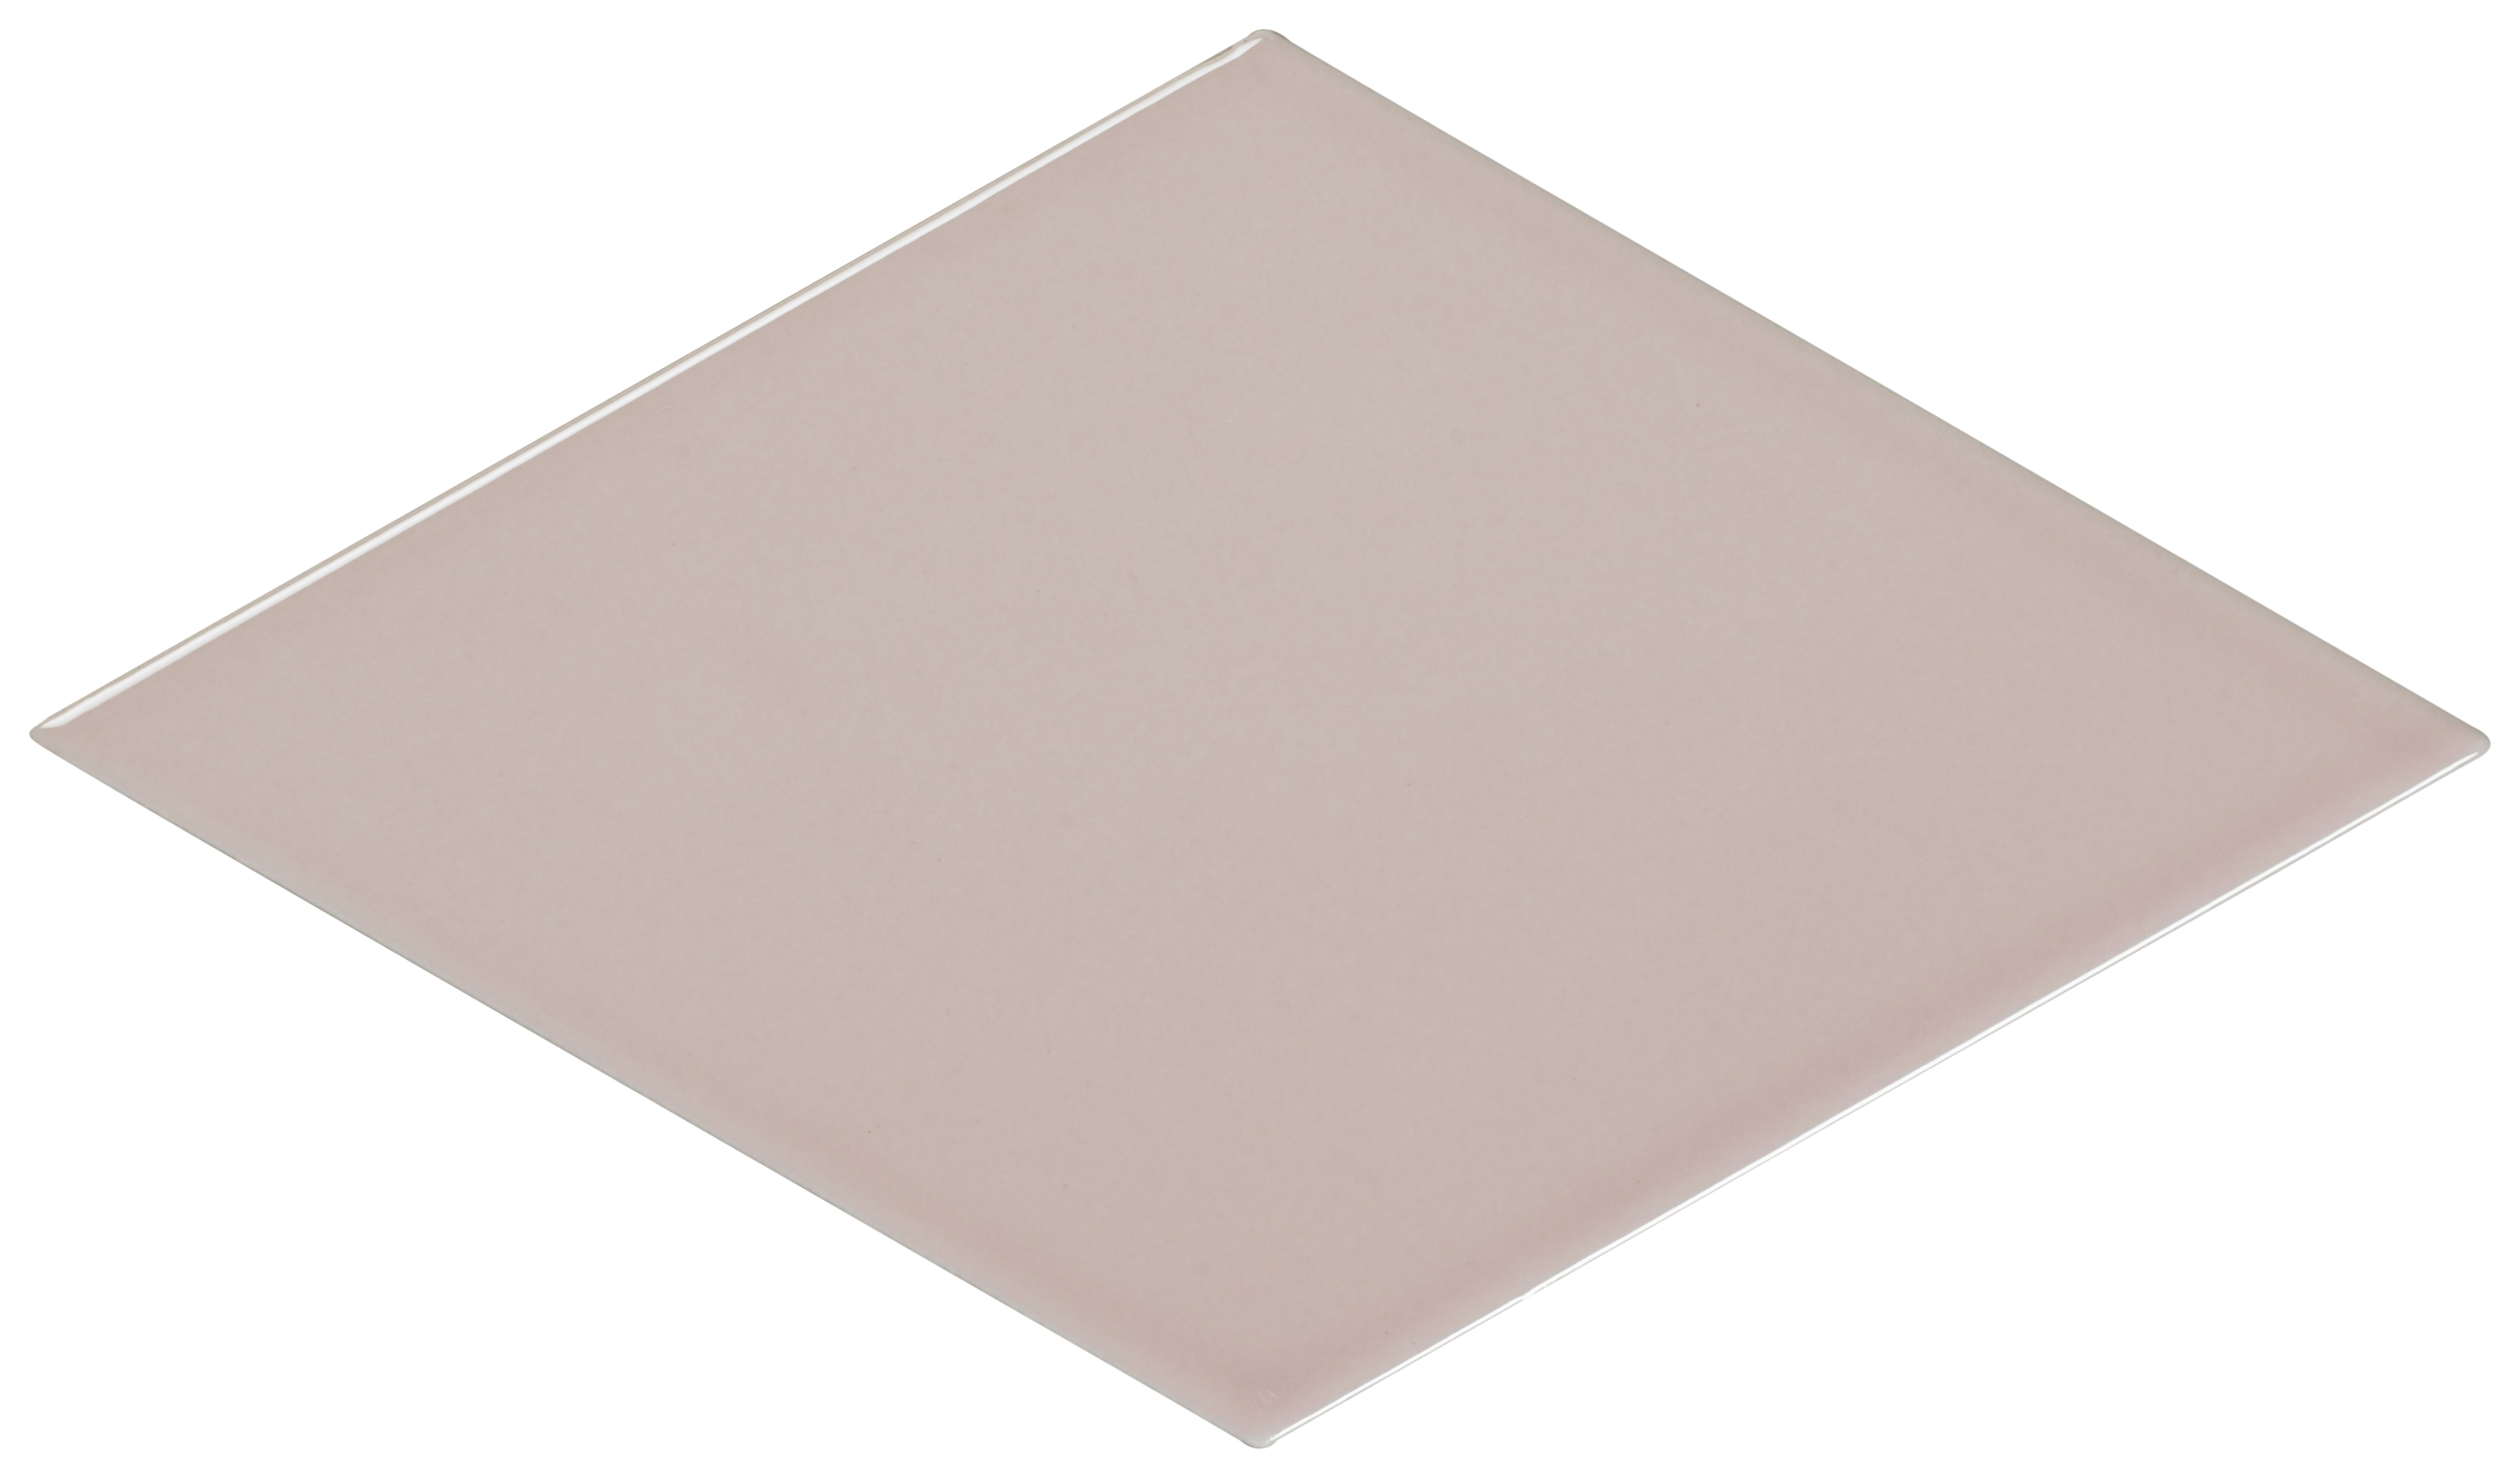 Wickes Boutique Lozenge Pink Gloss Ceramic Wall Tile - Cut Sample